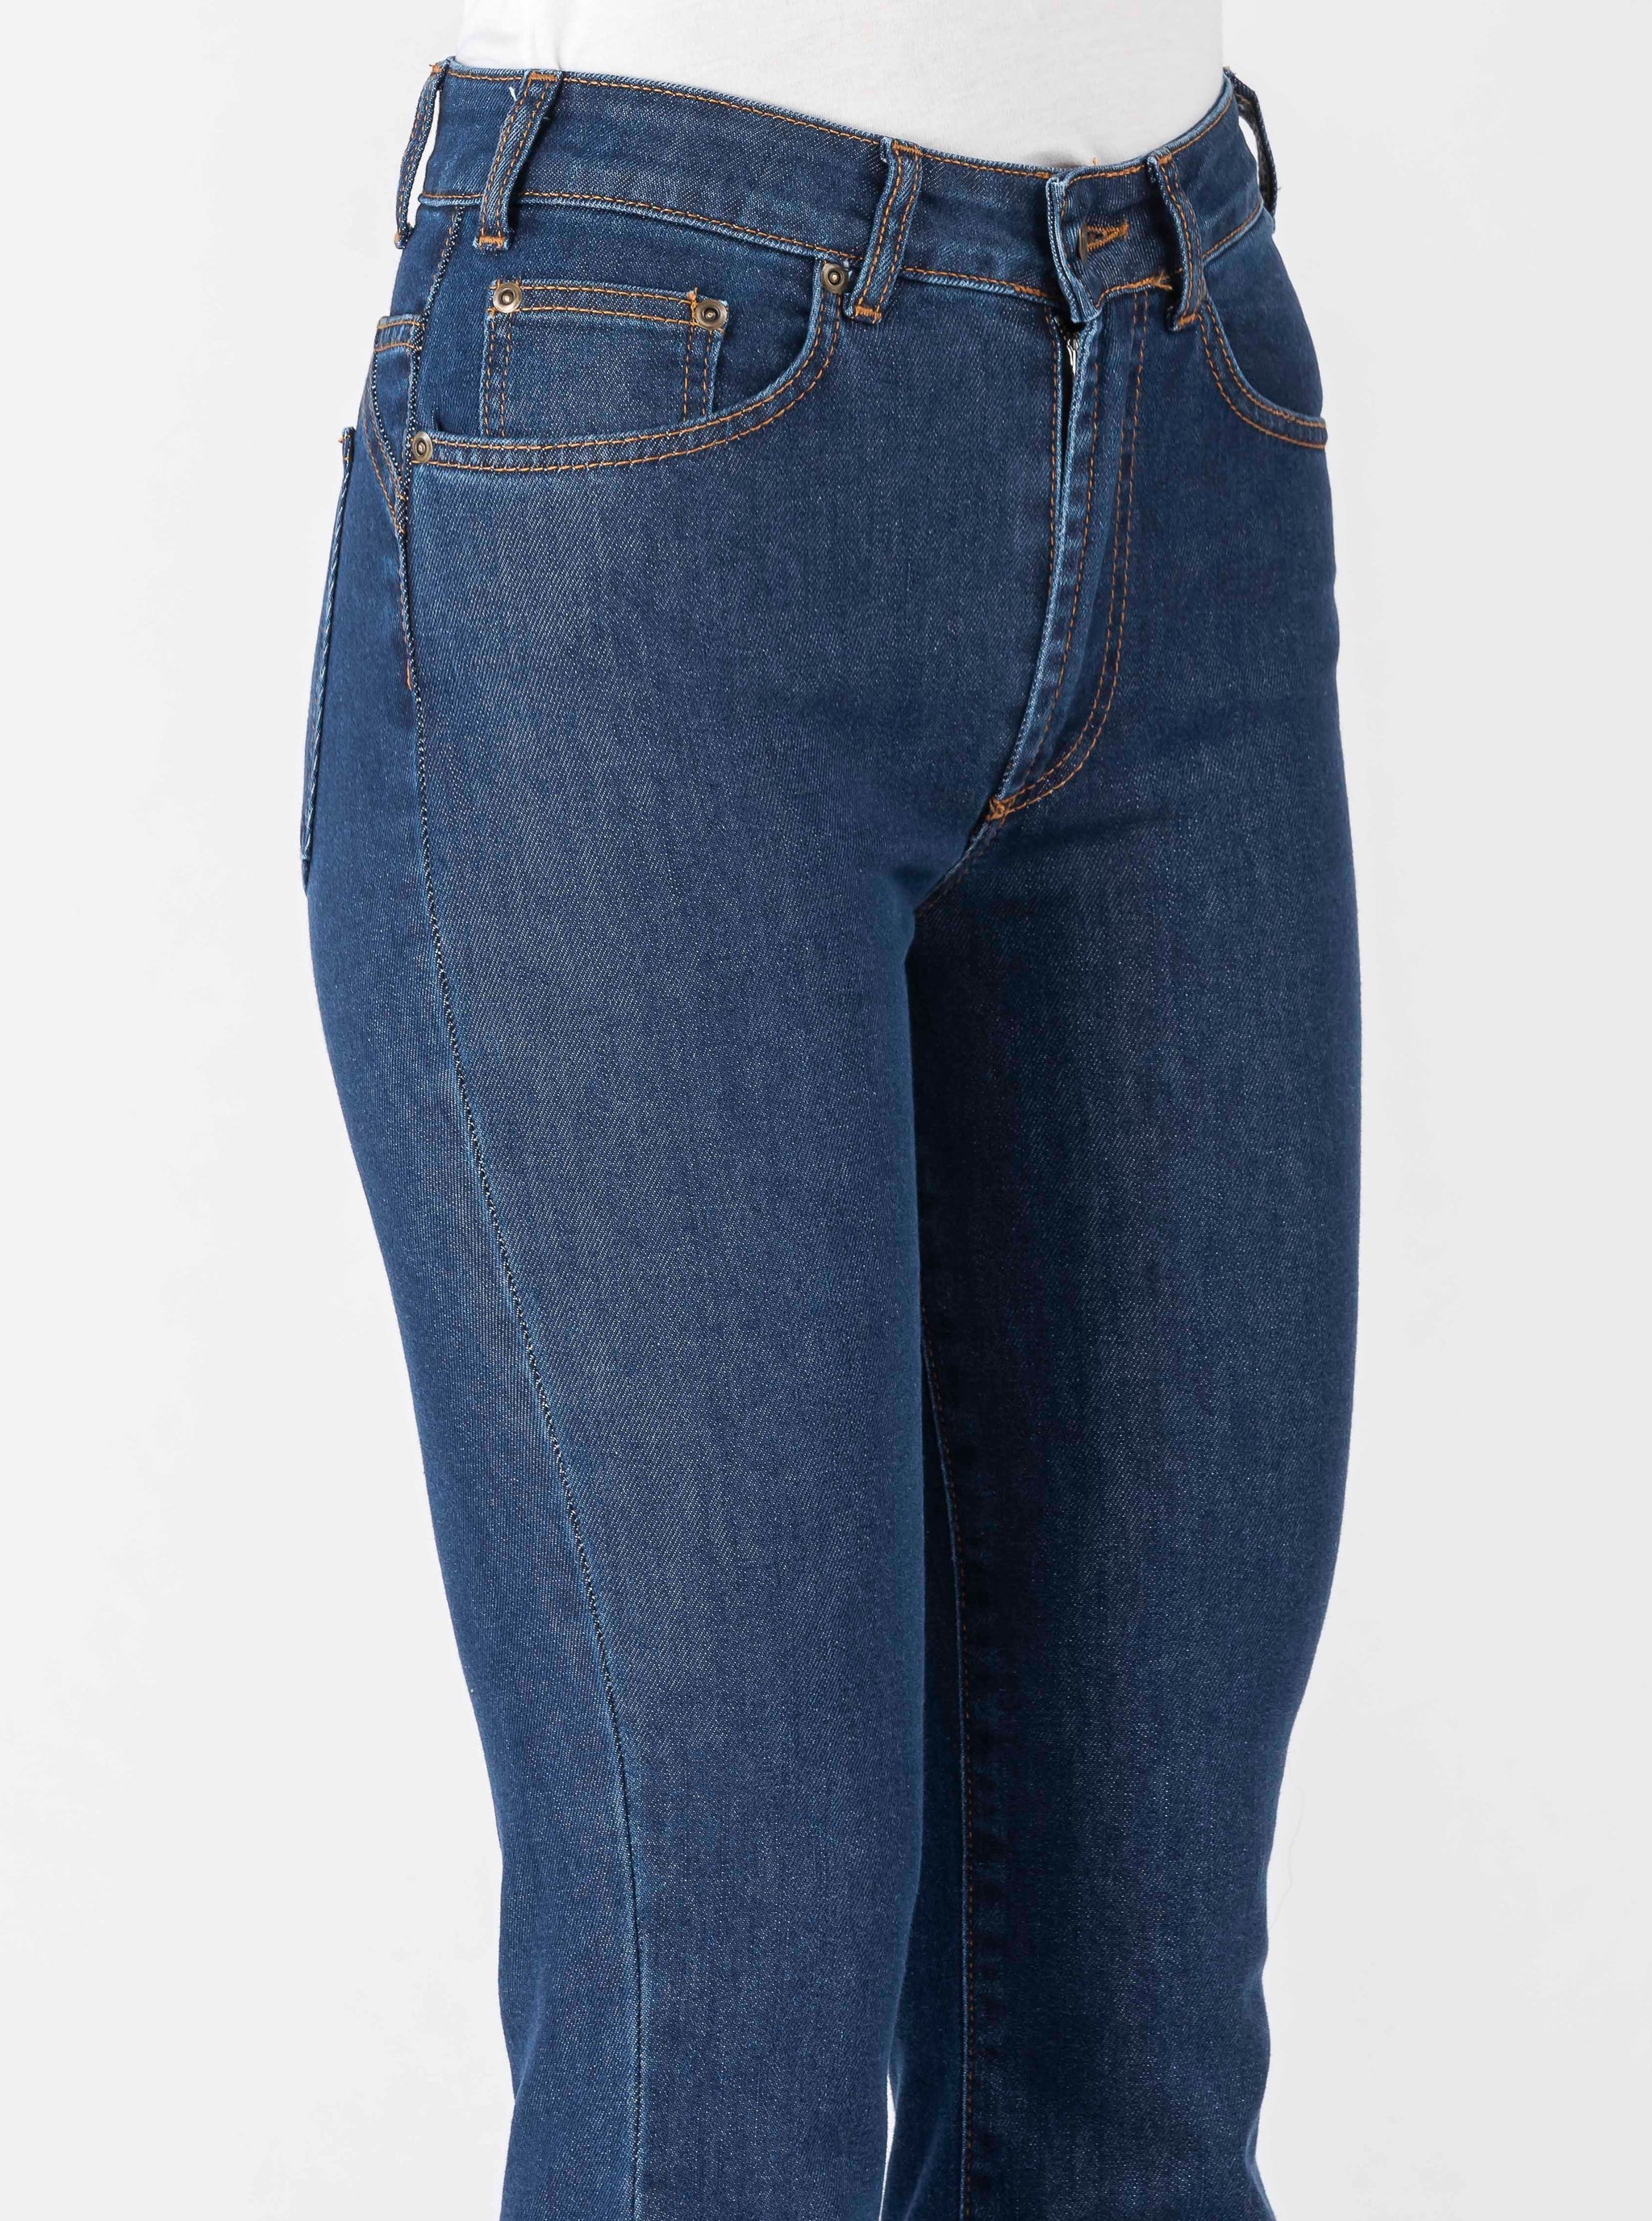 Par.co DENIM Woman Jeans Daisy Medium Boot cut Jeans bæredygtig mode etisk mode